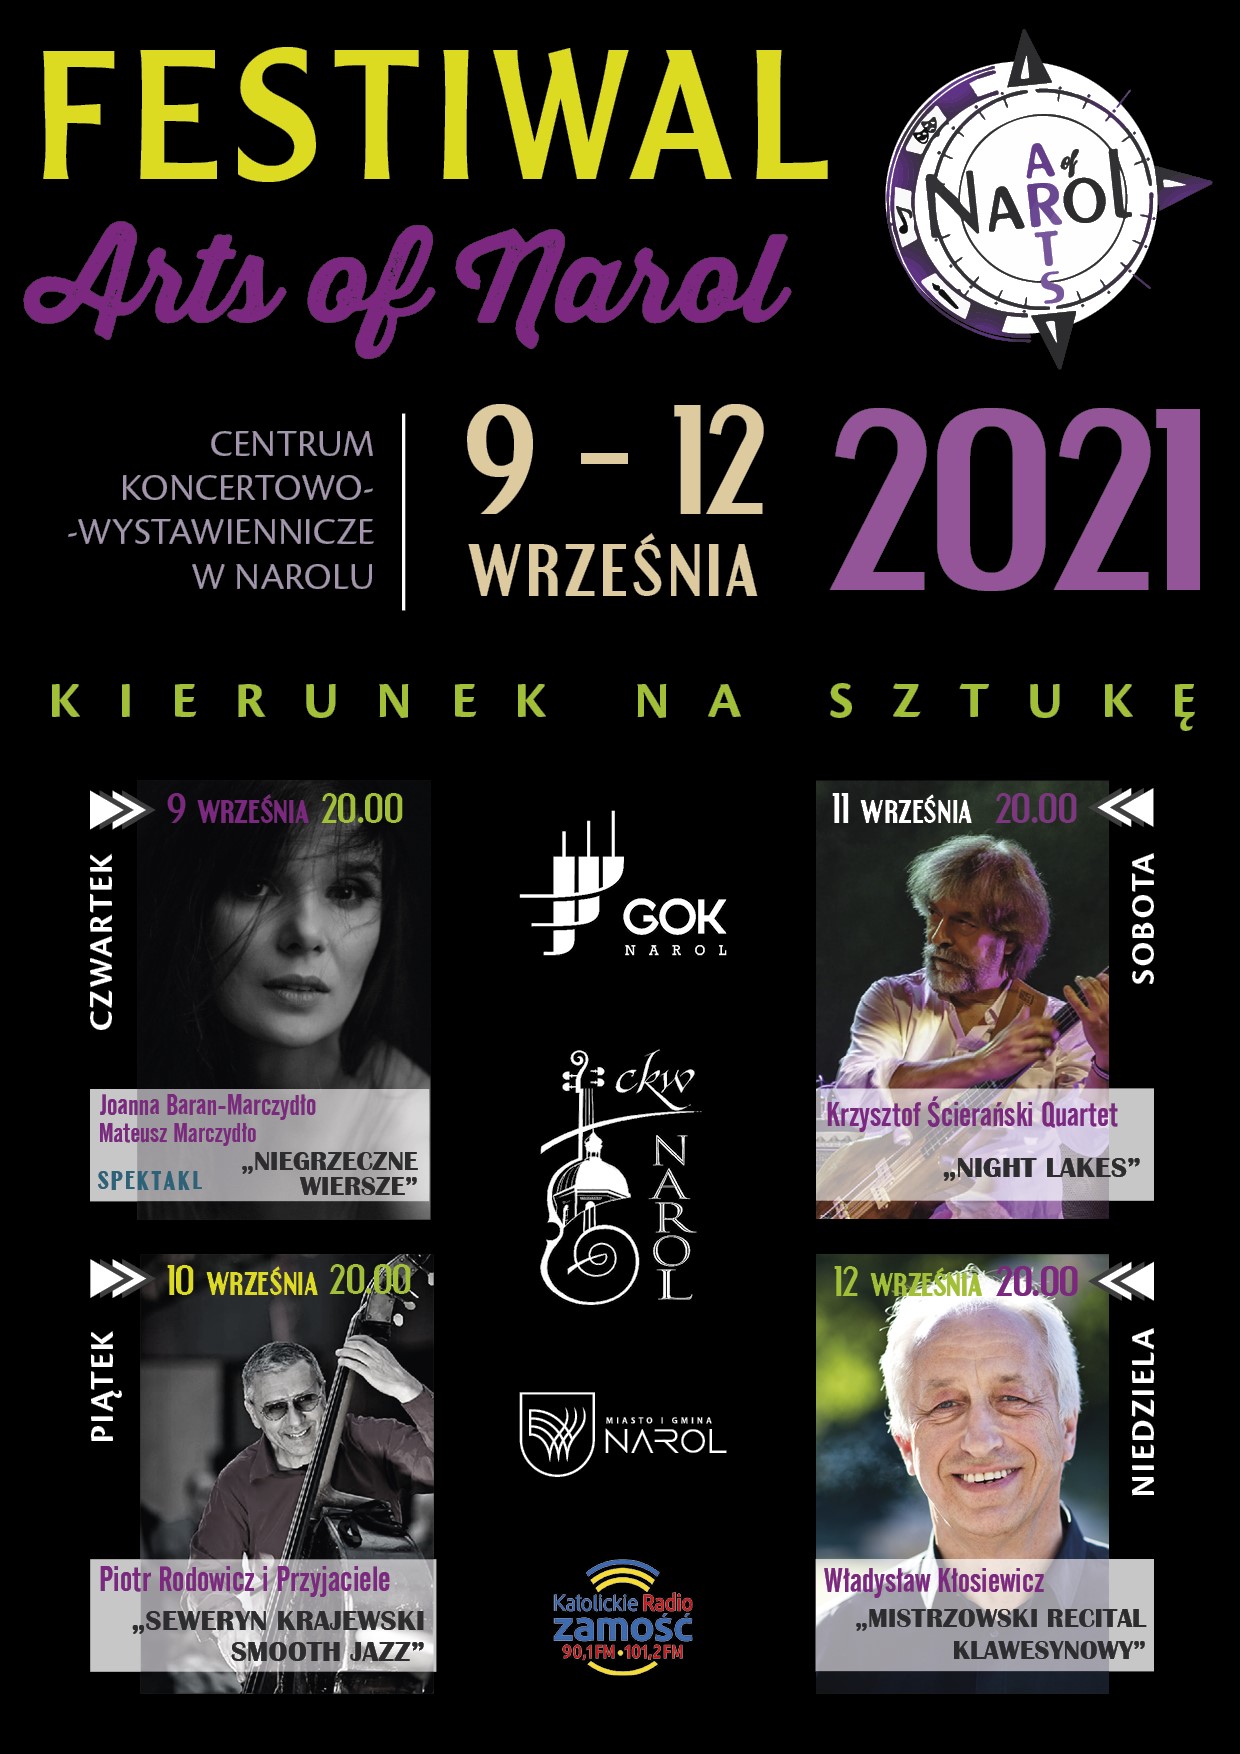 Festiwal Arts of Narol 2021